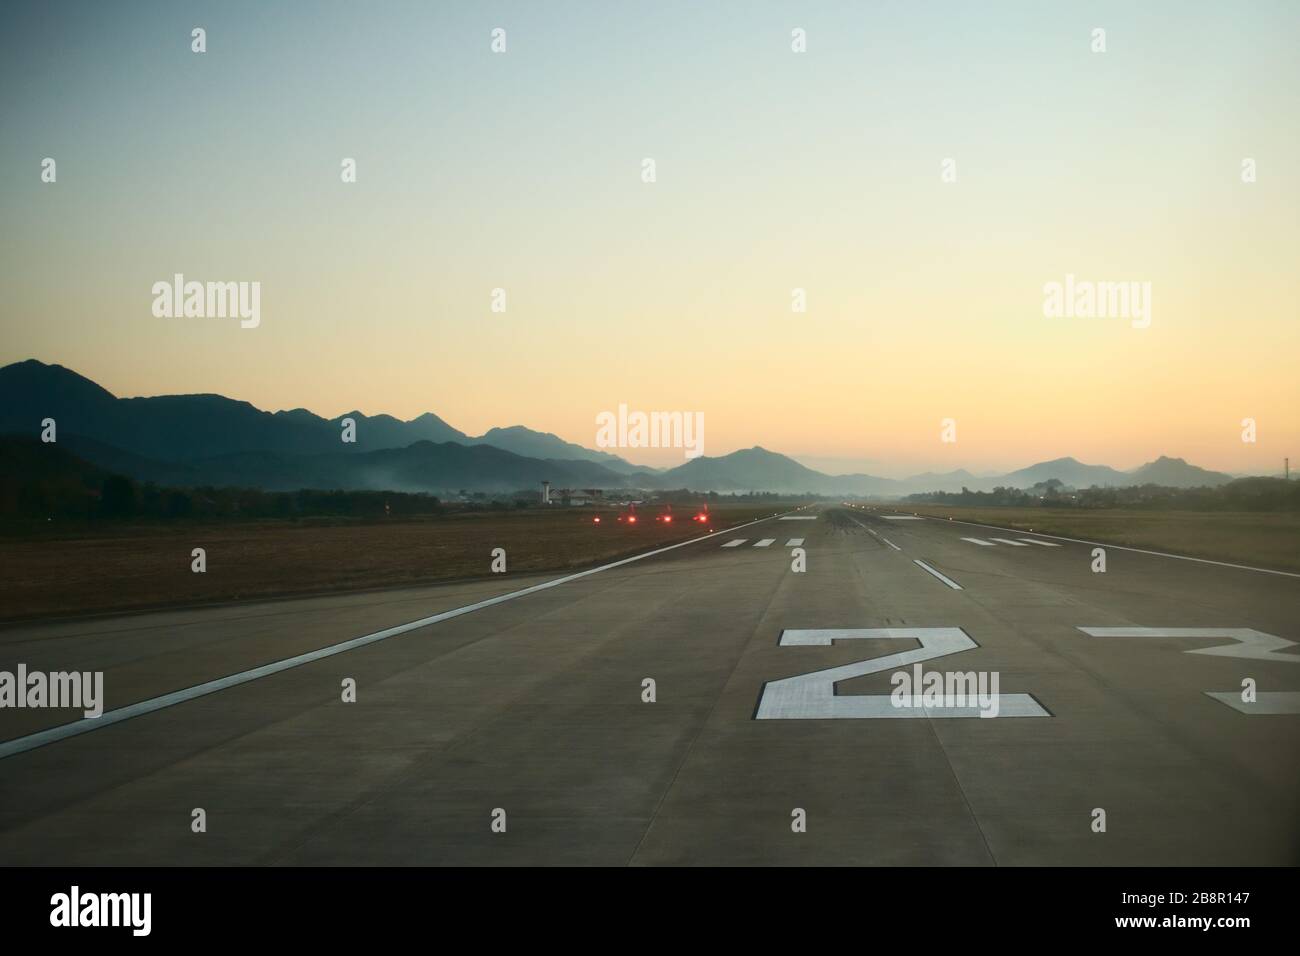 Airport runway at dawn. Travel, air transport, aeronautical industry concept. Stock Photo